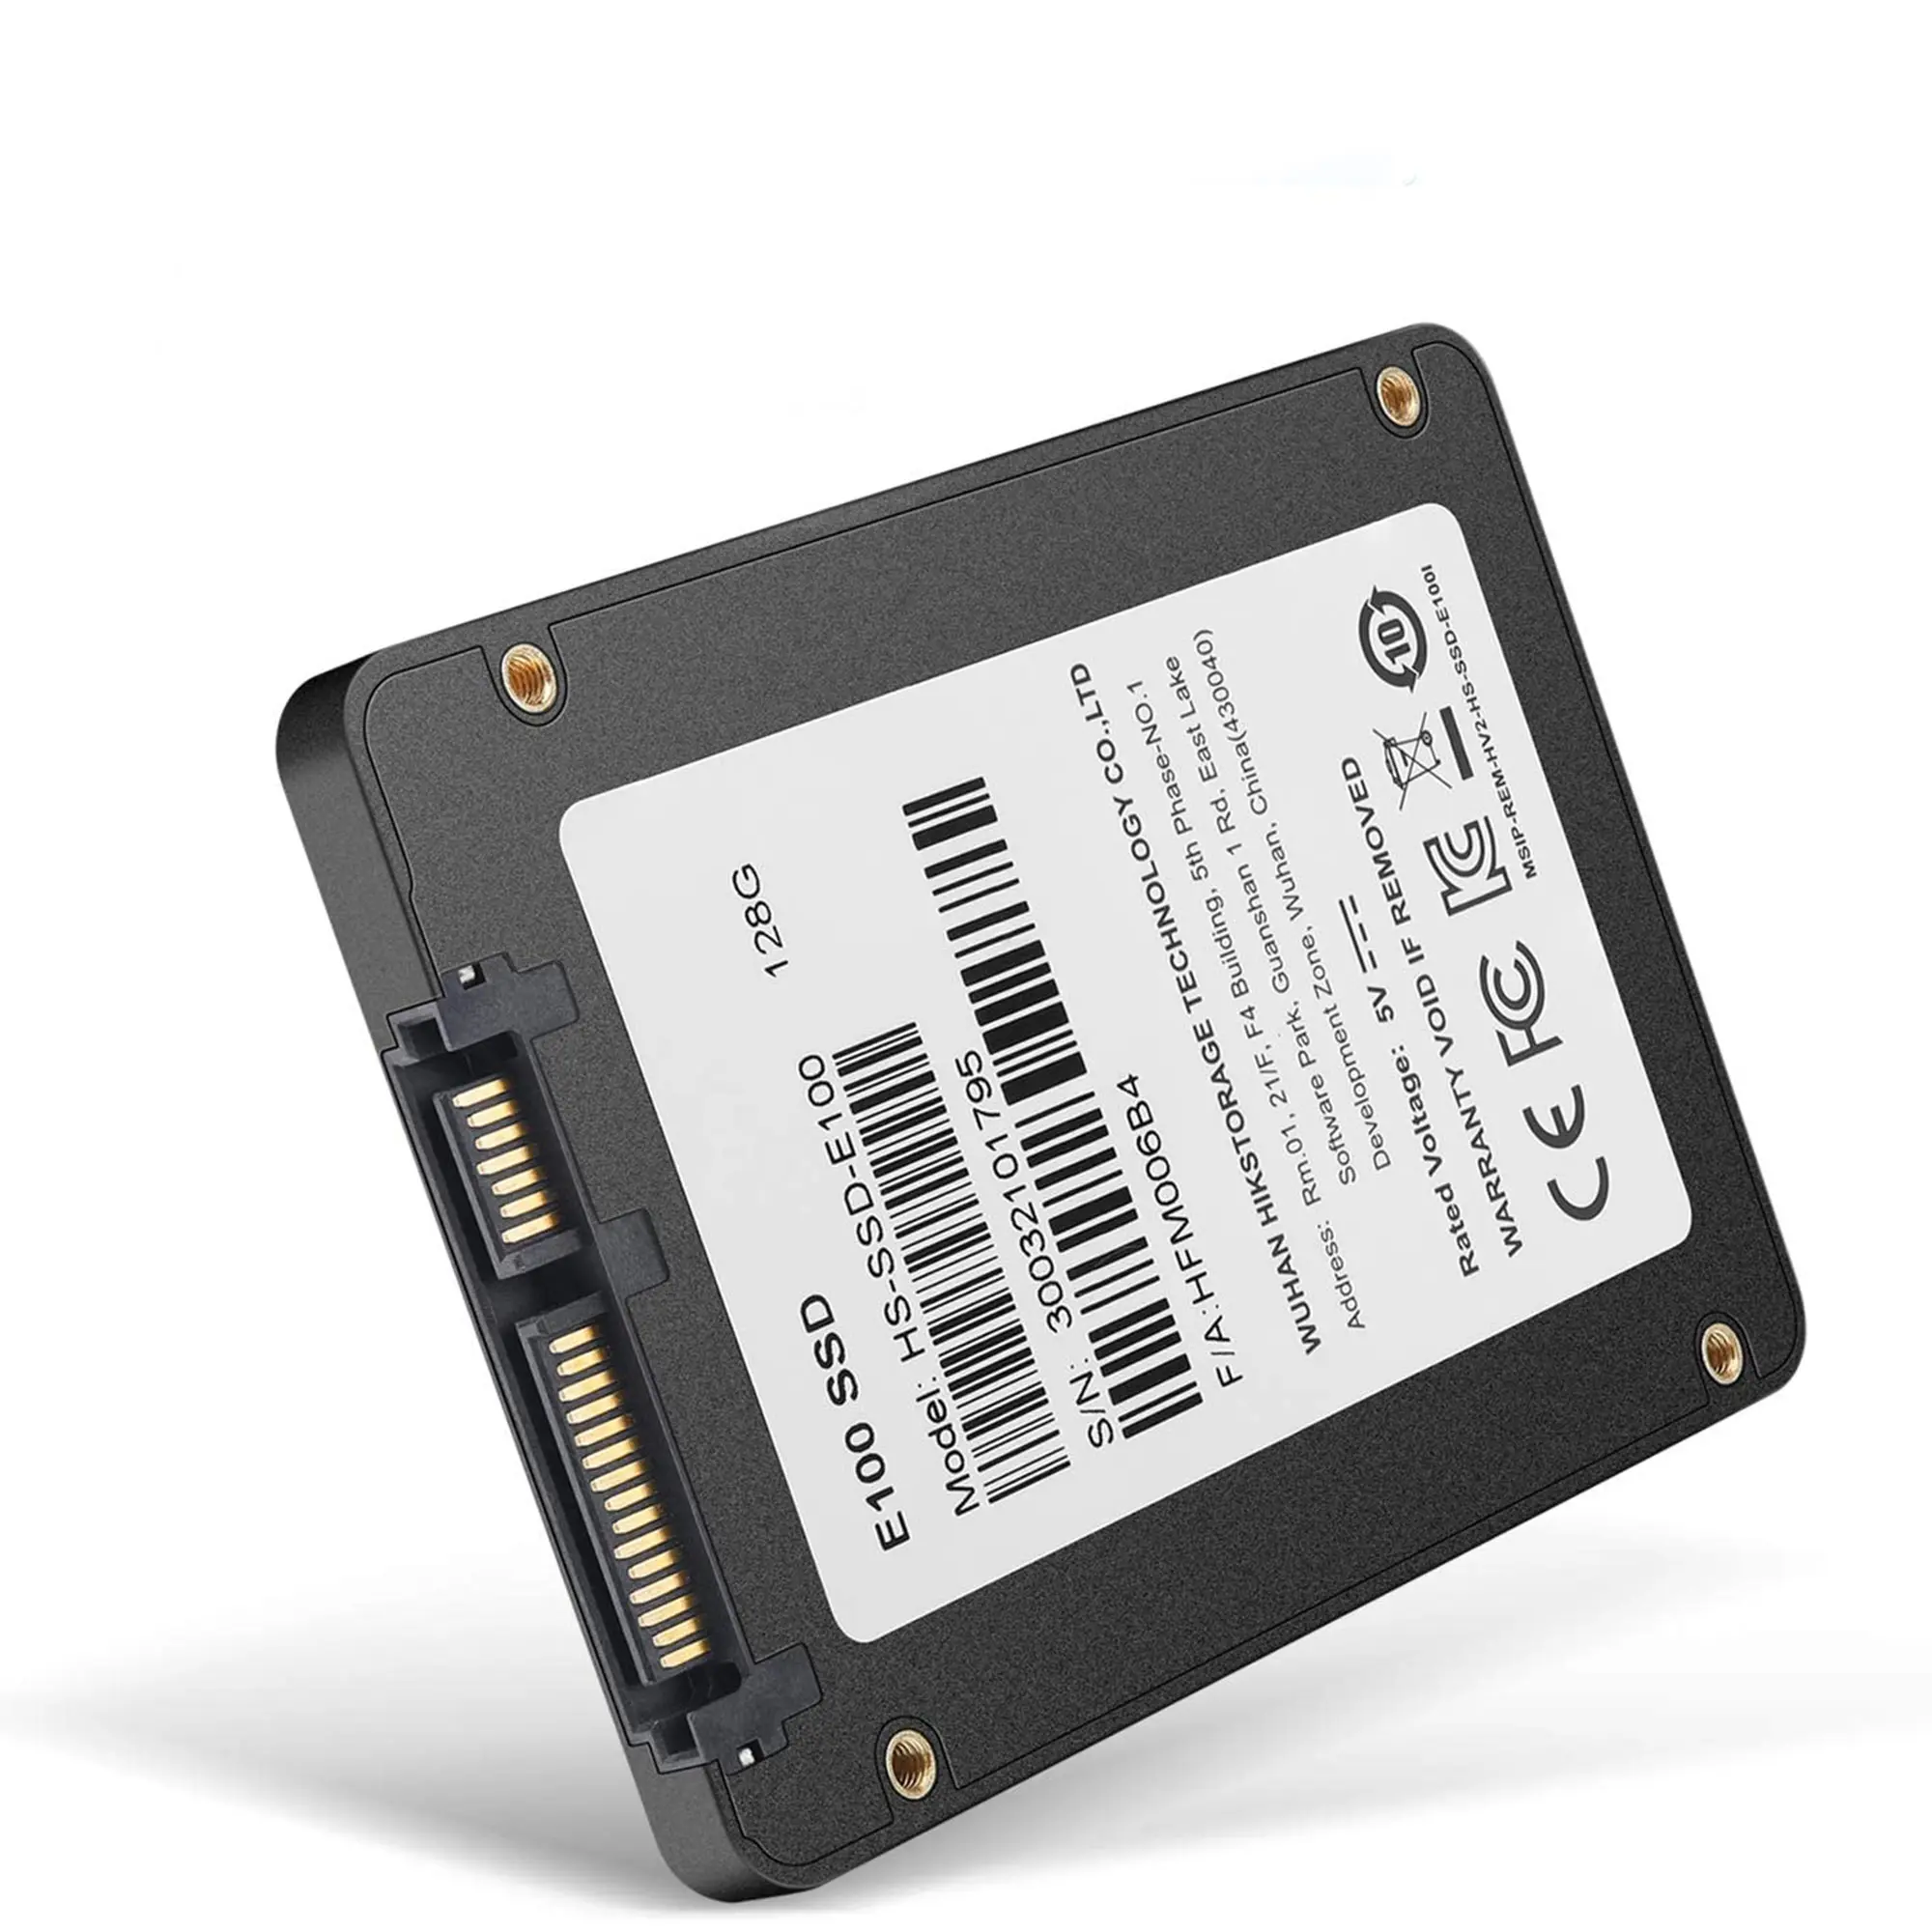 Disque dur interne SSD Hikvision Desire(S) SATA 2.5 128 Go (HS